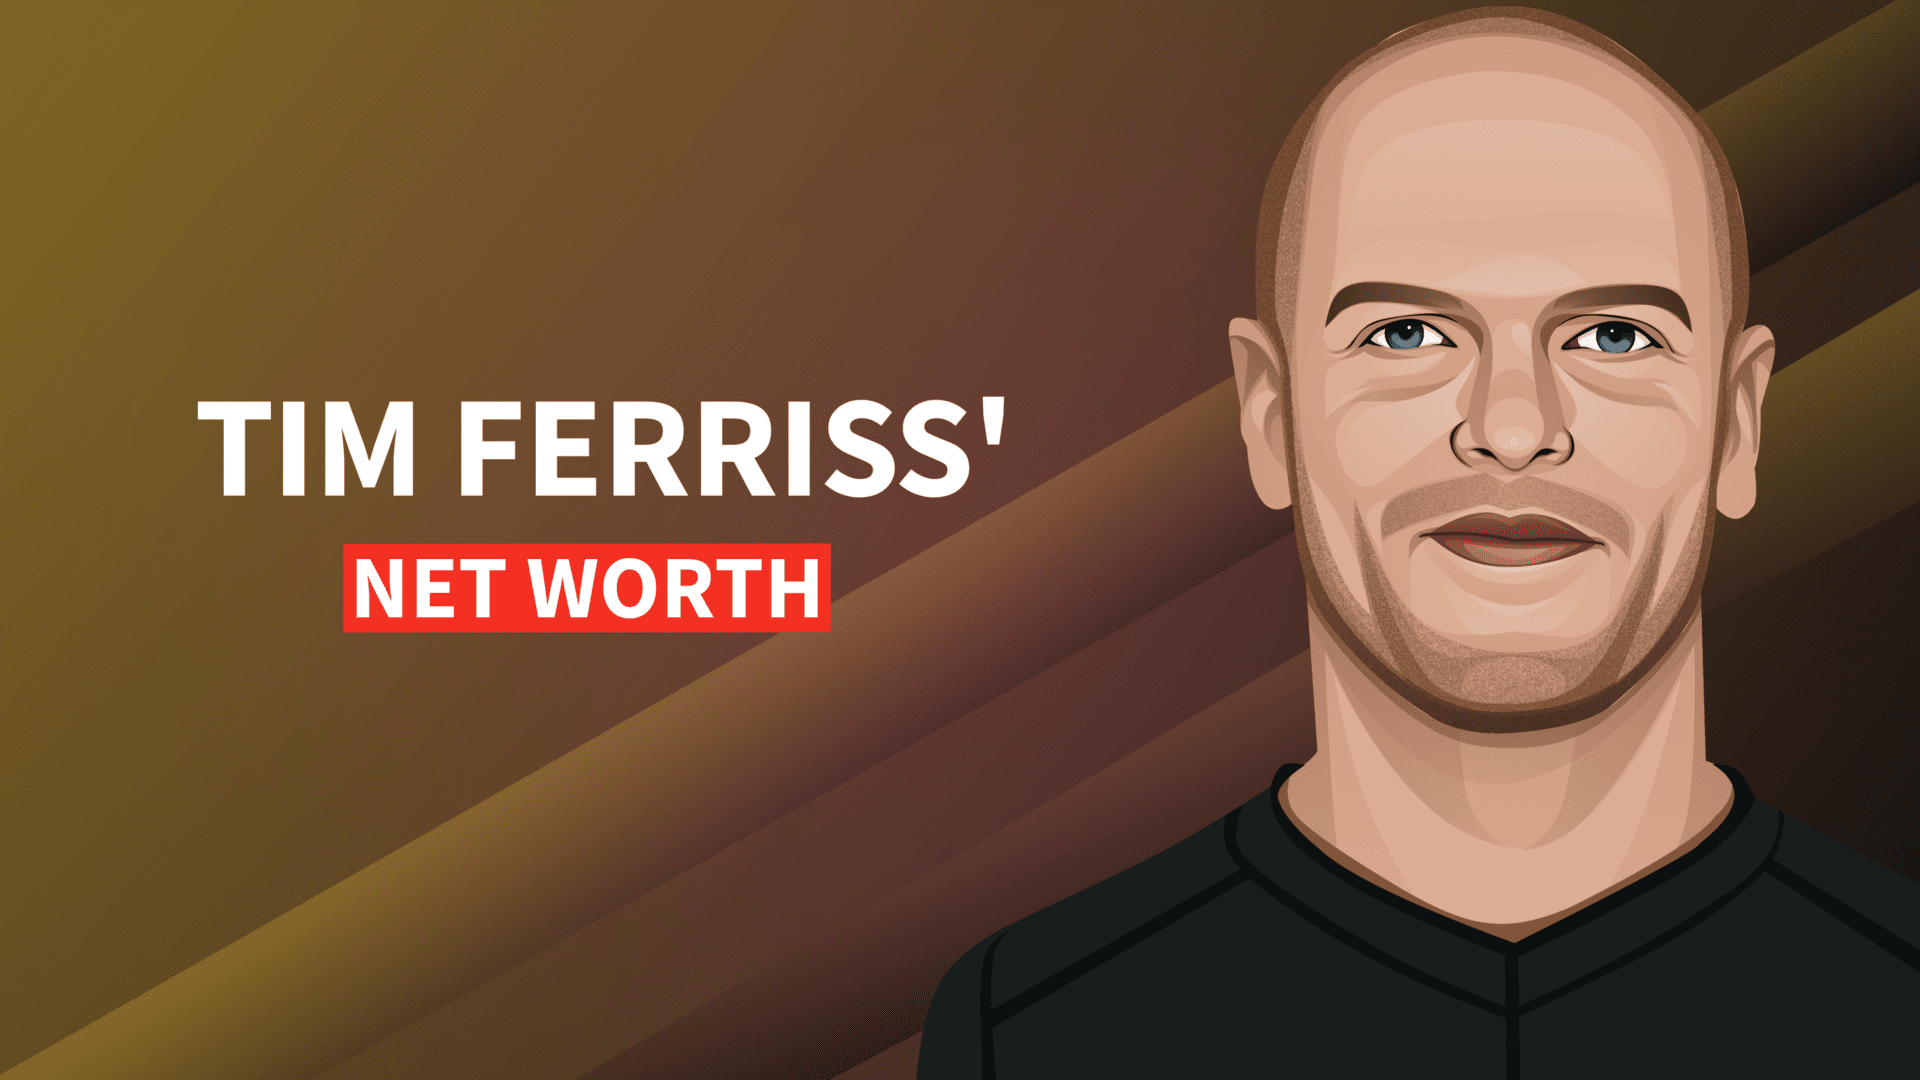 Ferriss' Net Worth and Inspiring Story